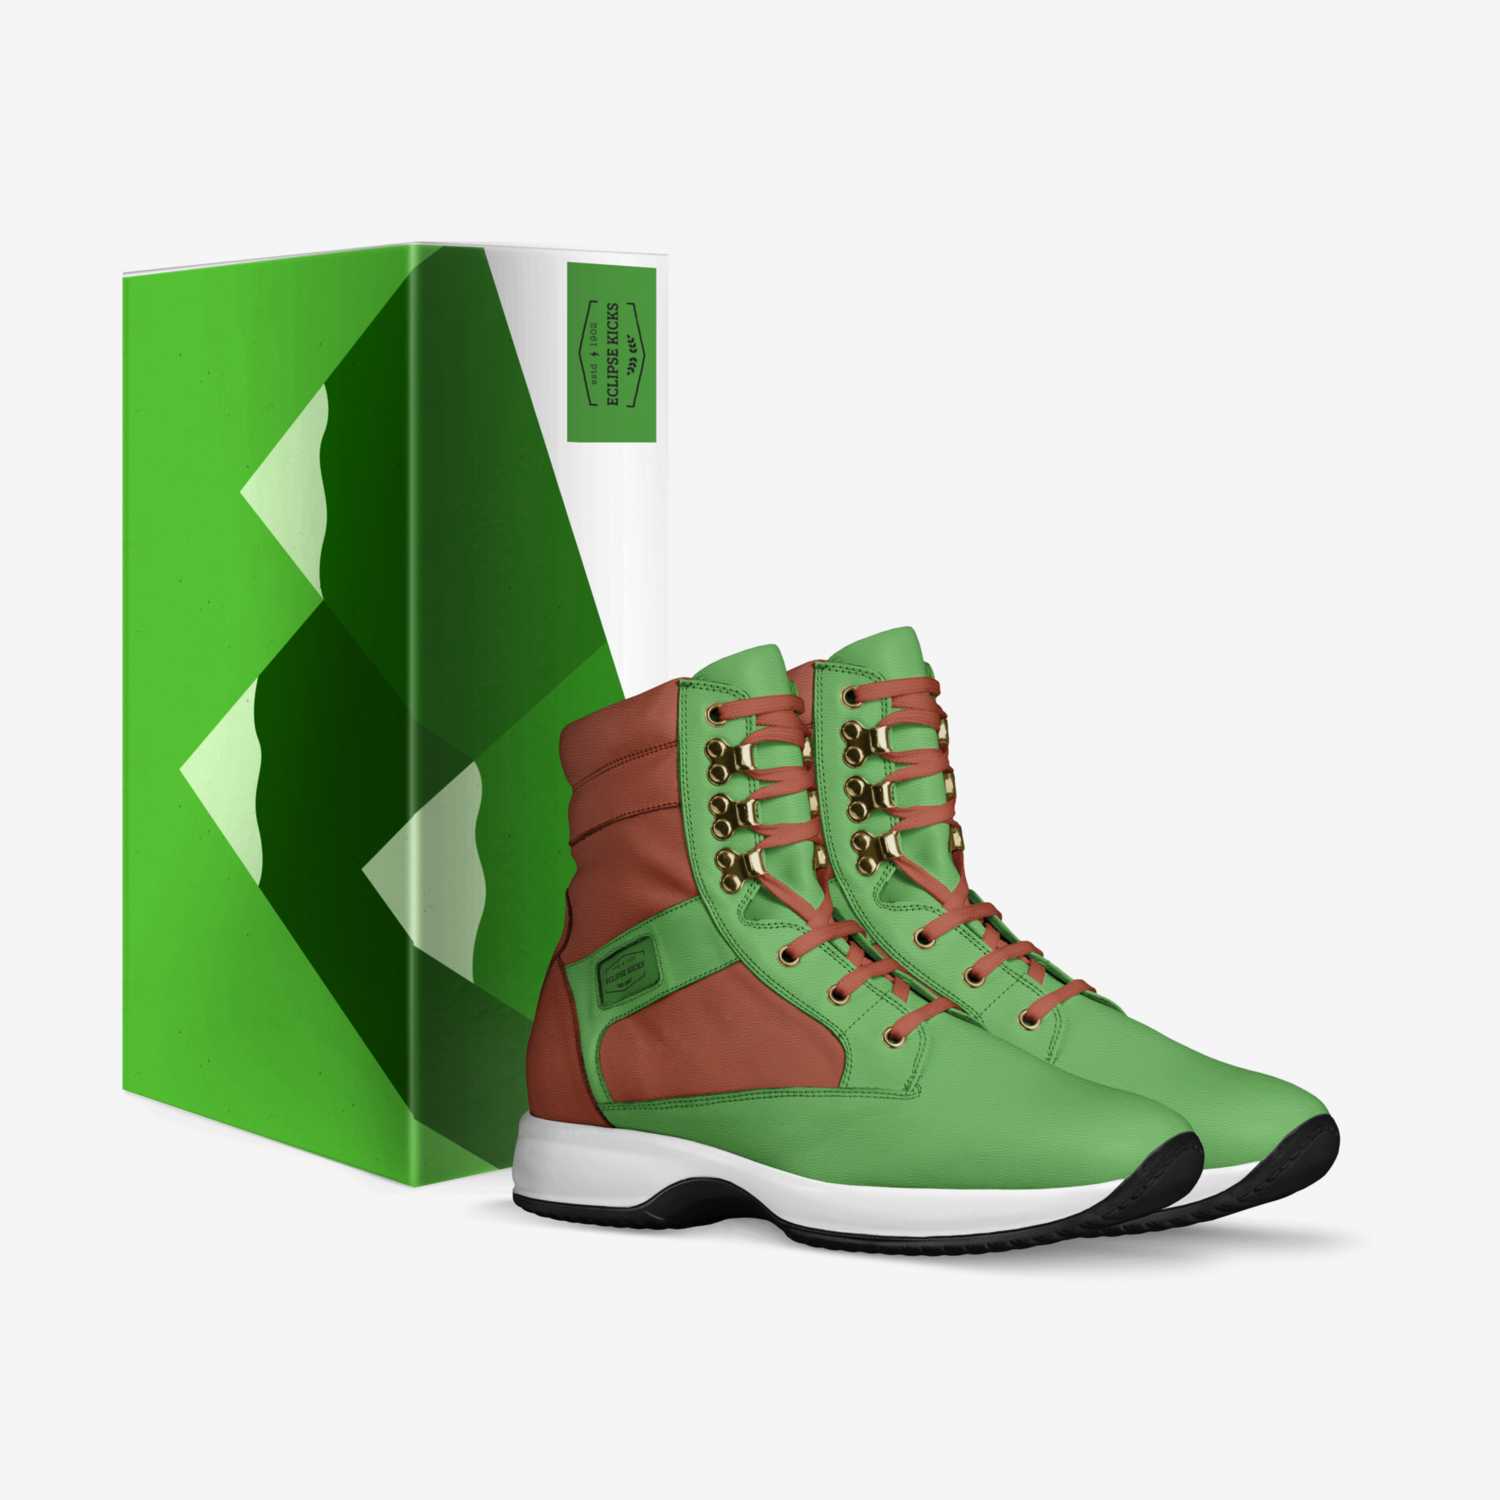 Eclipse kicks custom made in Italy shoes by Carlos Bangalan | Box view